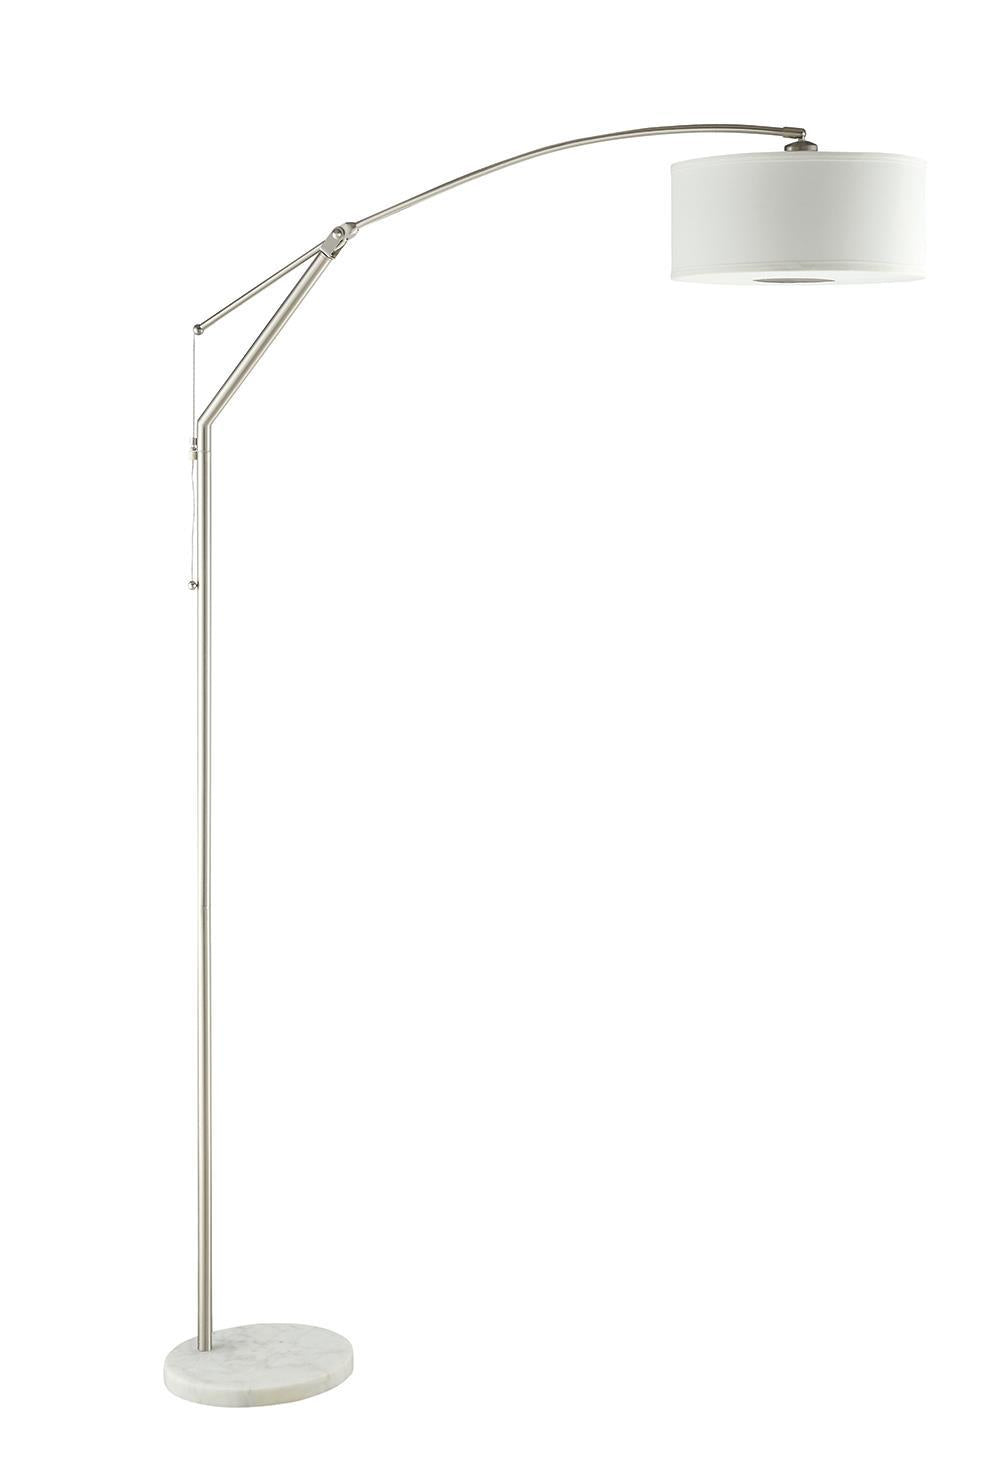 Moniz Adjustable Arched Arm Floor Lamp Chrome and White - Half Price Furniture